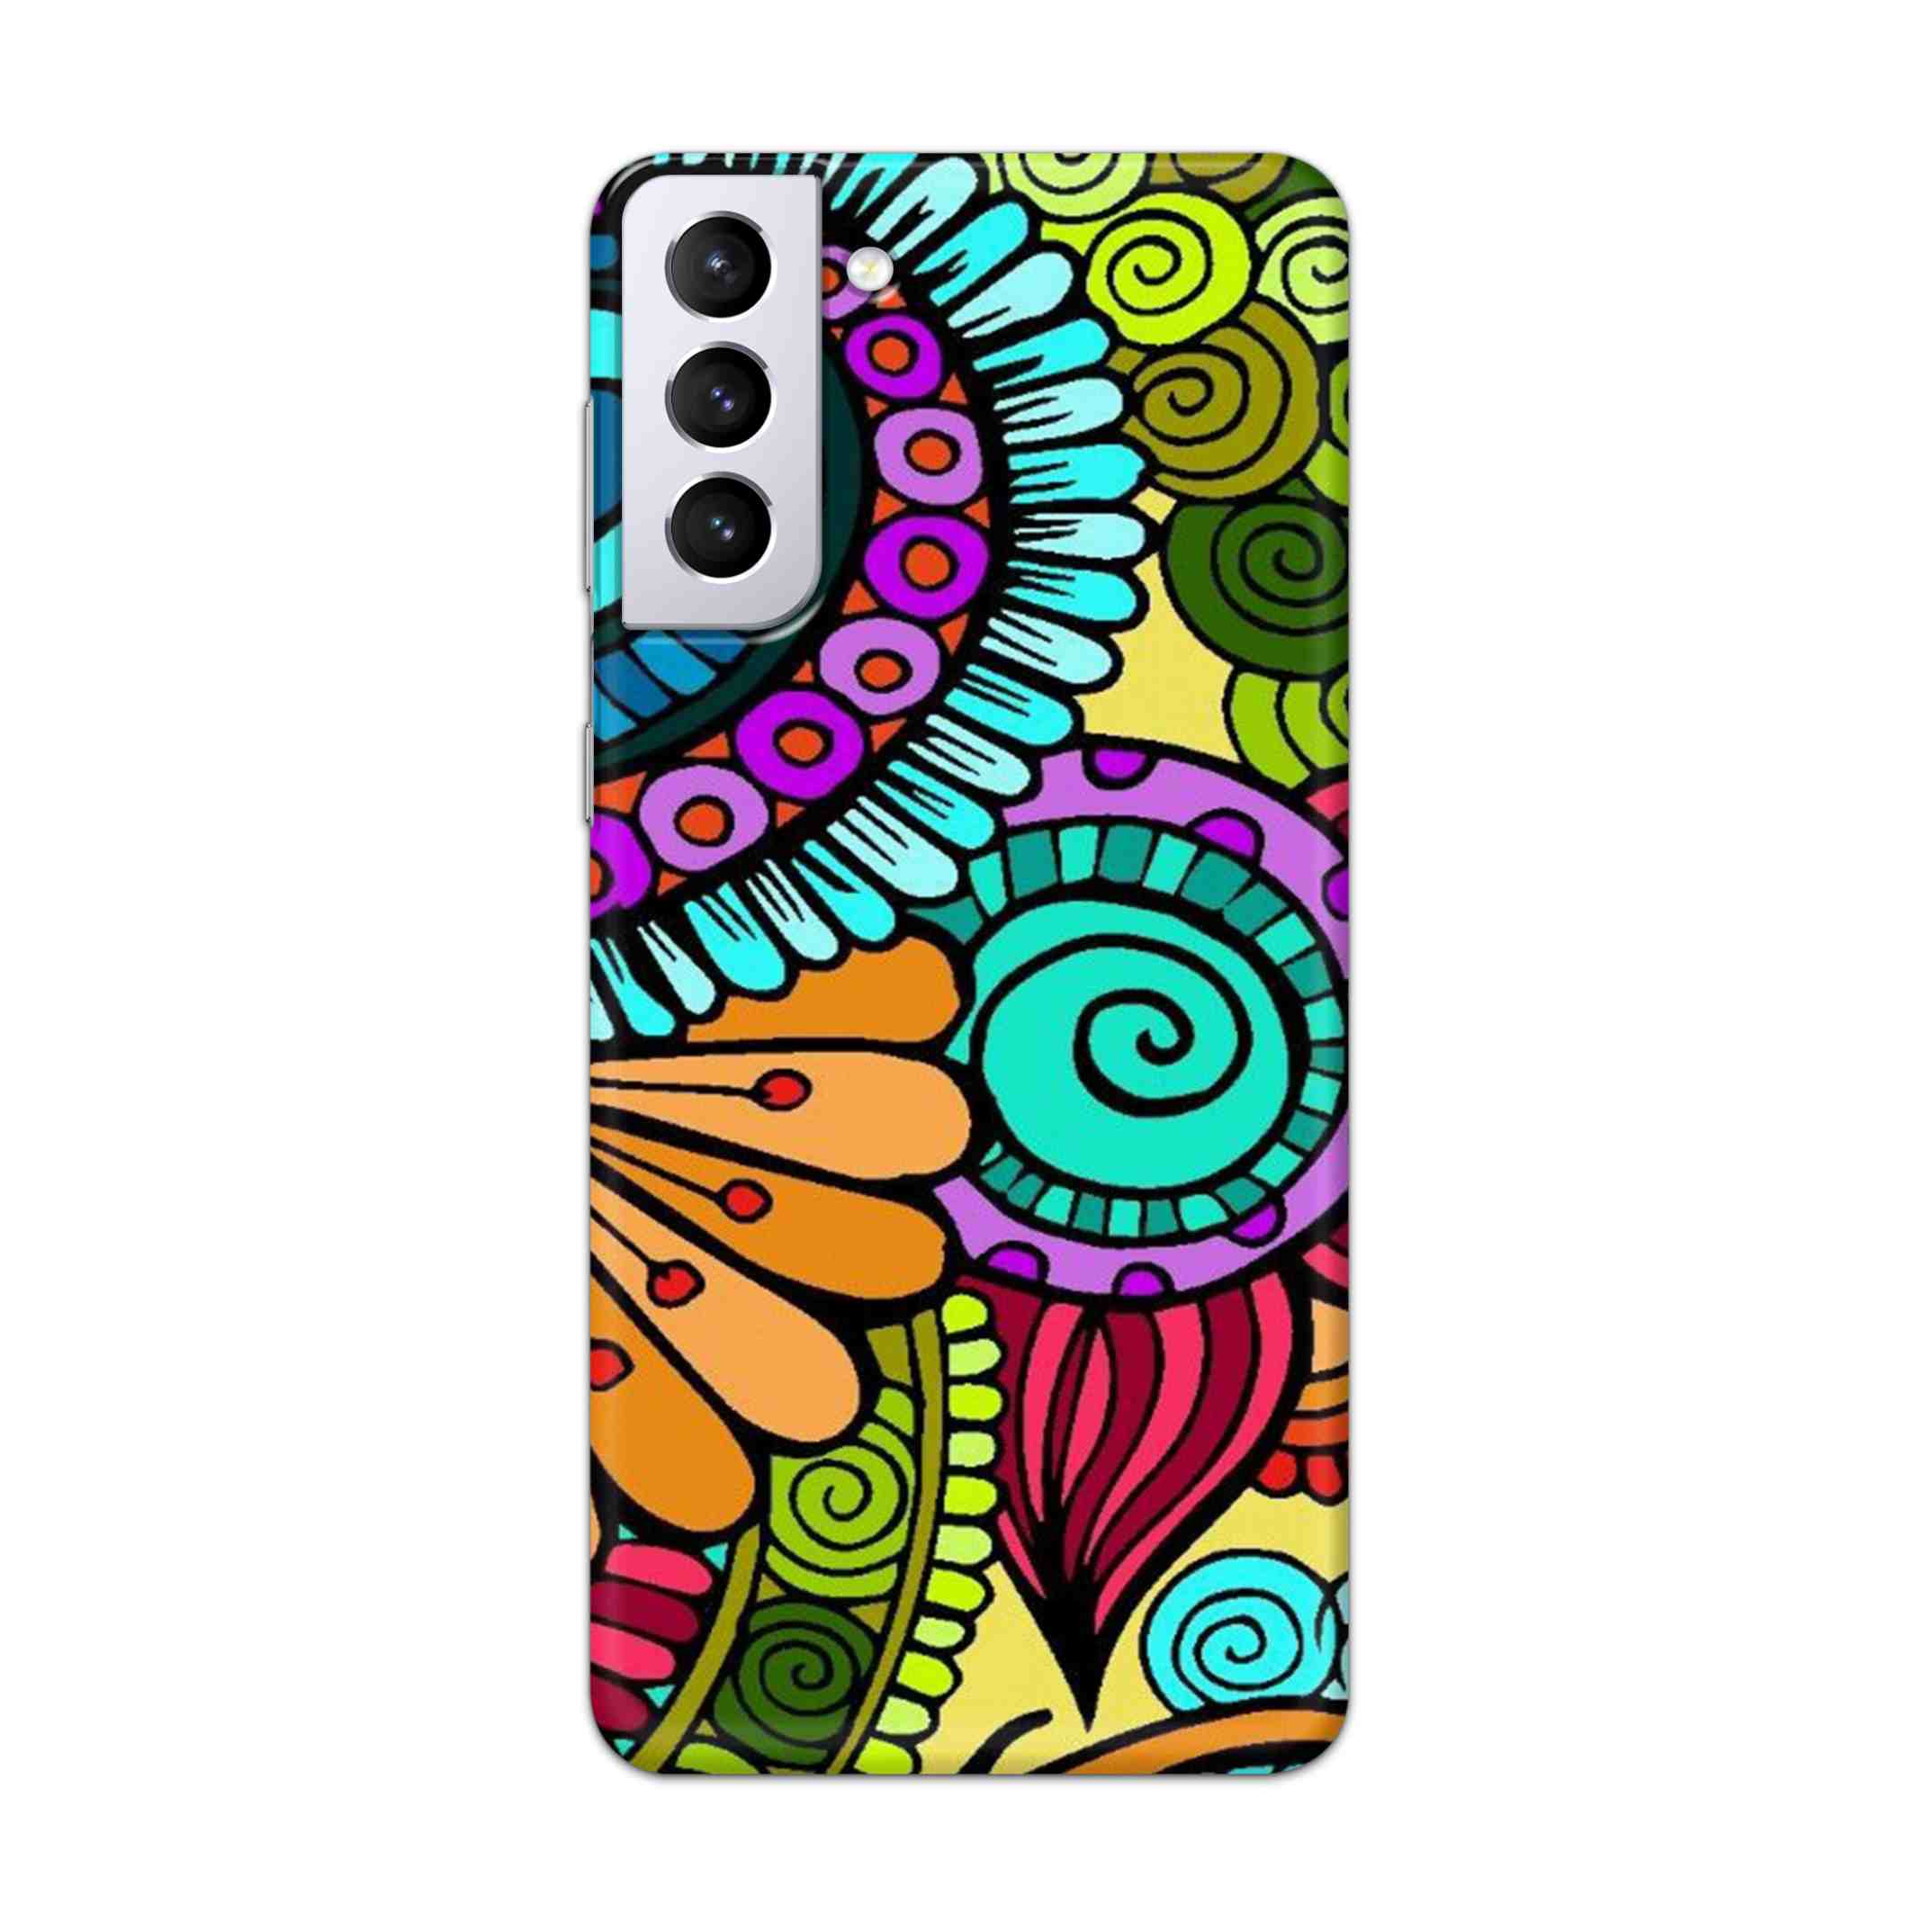 Buy The Kalachakra Mandala Hard Back Mobile Phone Case Cover For Samsung Galaxy S21 Plus Online